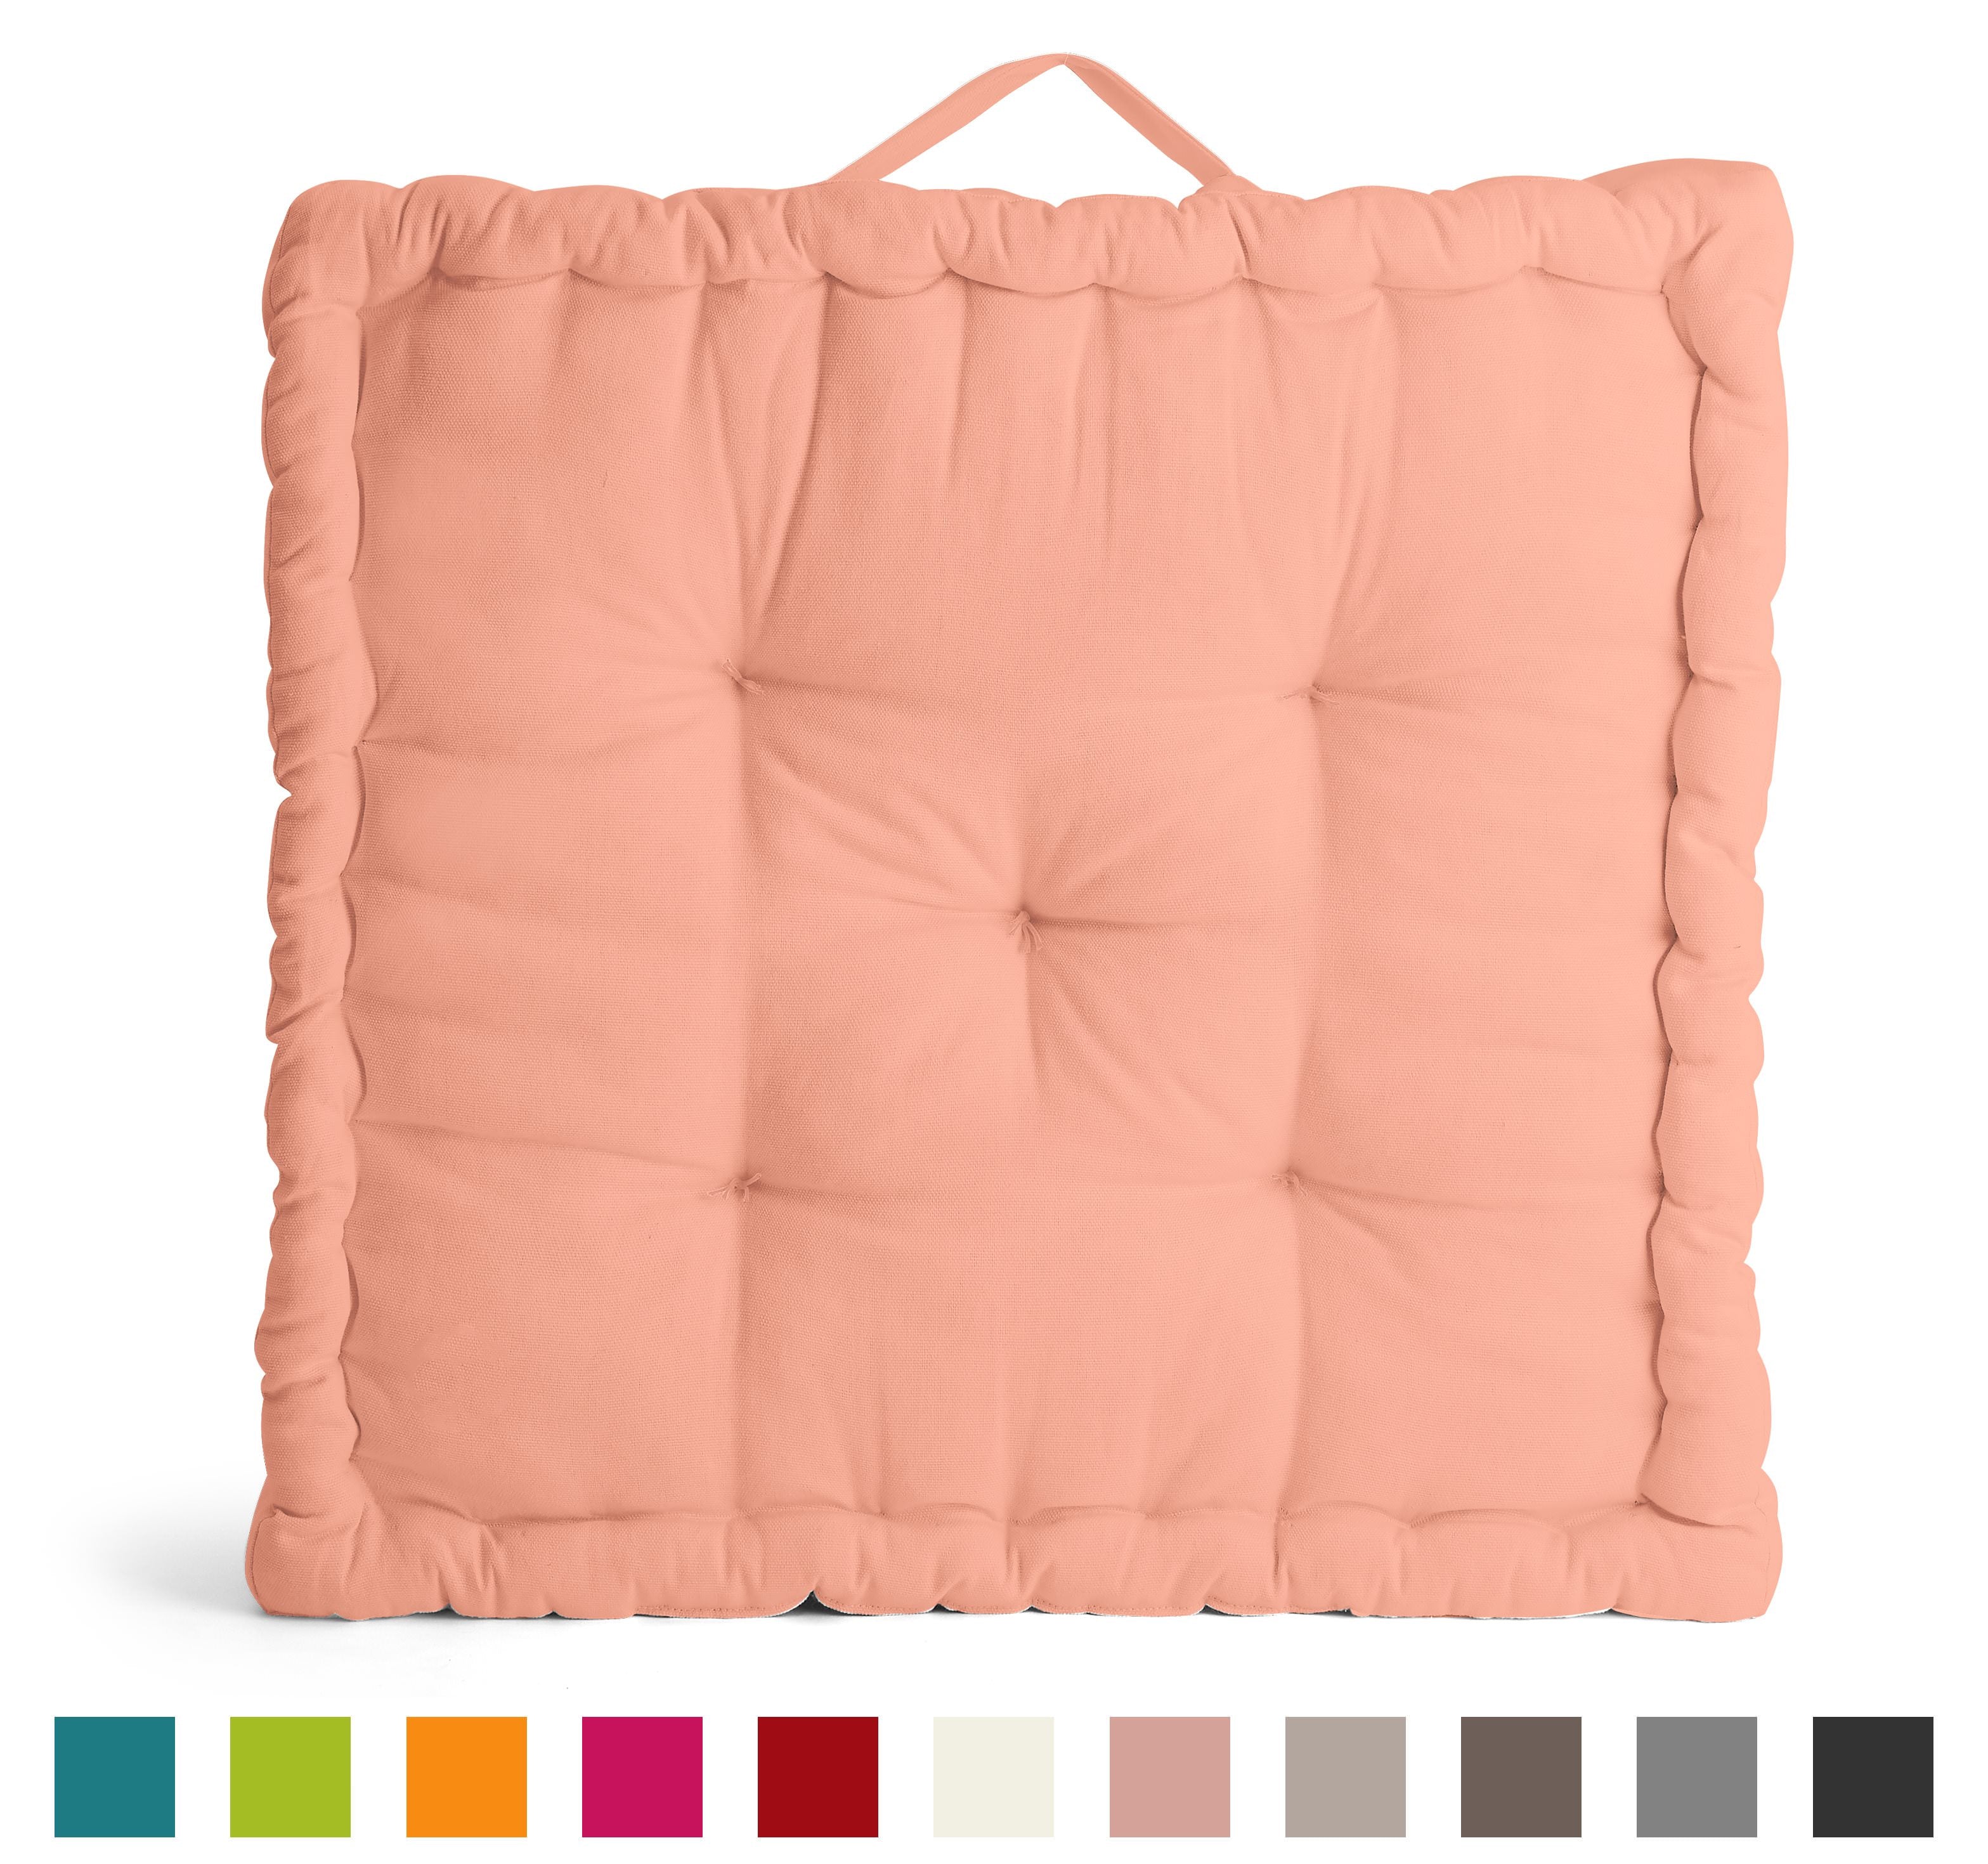 Encasa Homes Rich Cotton Canvas Floor Cushions - Choice of 11 Colours and 3 Sizes - Size 50x50x10 cm, Powder Pink